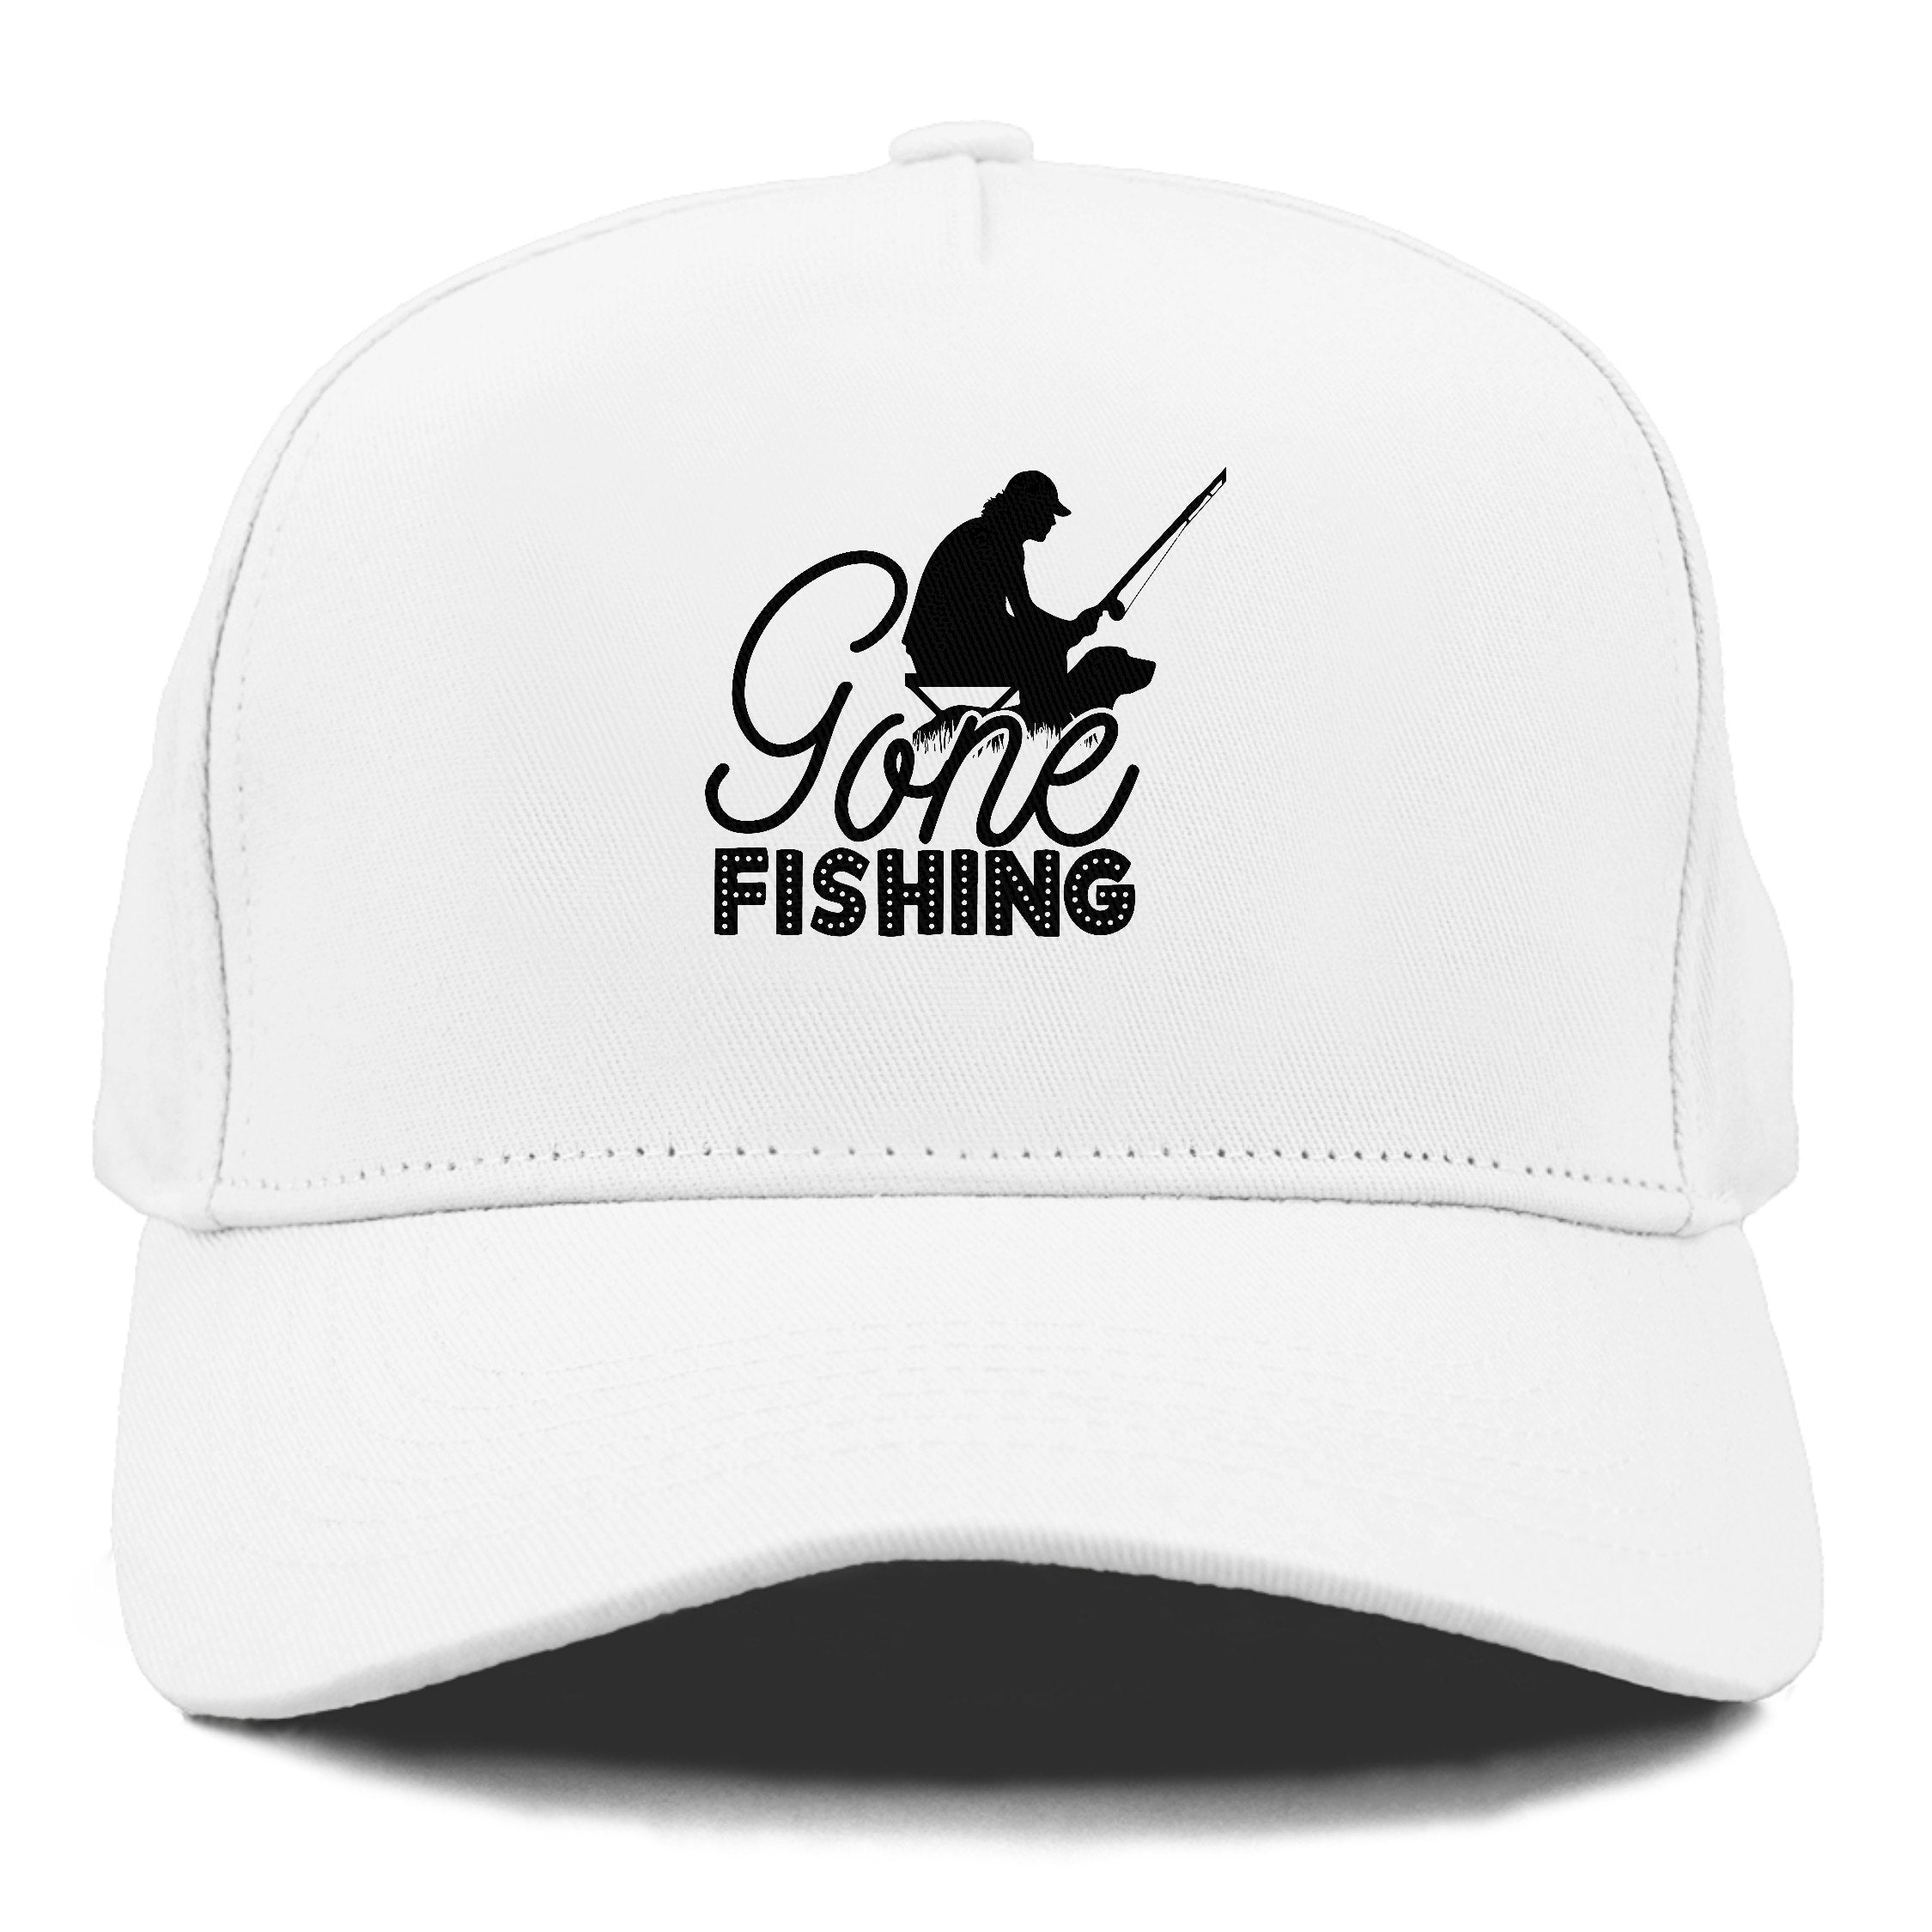 Gone Fishing Cap White